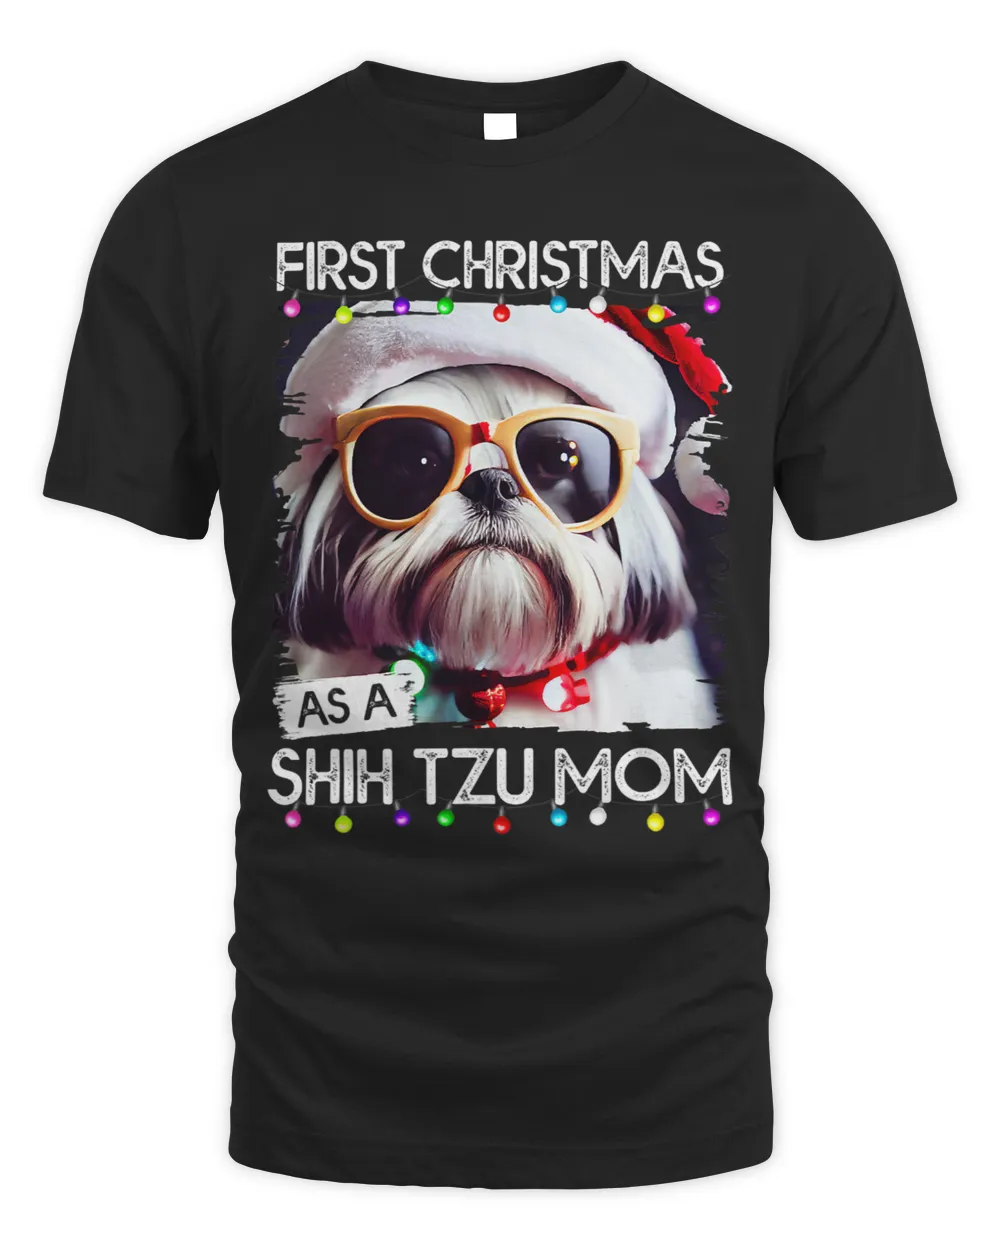 First Christmas as a Shih Tzu mom 29